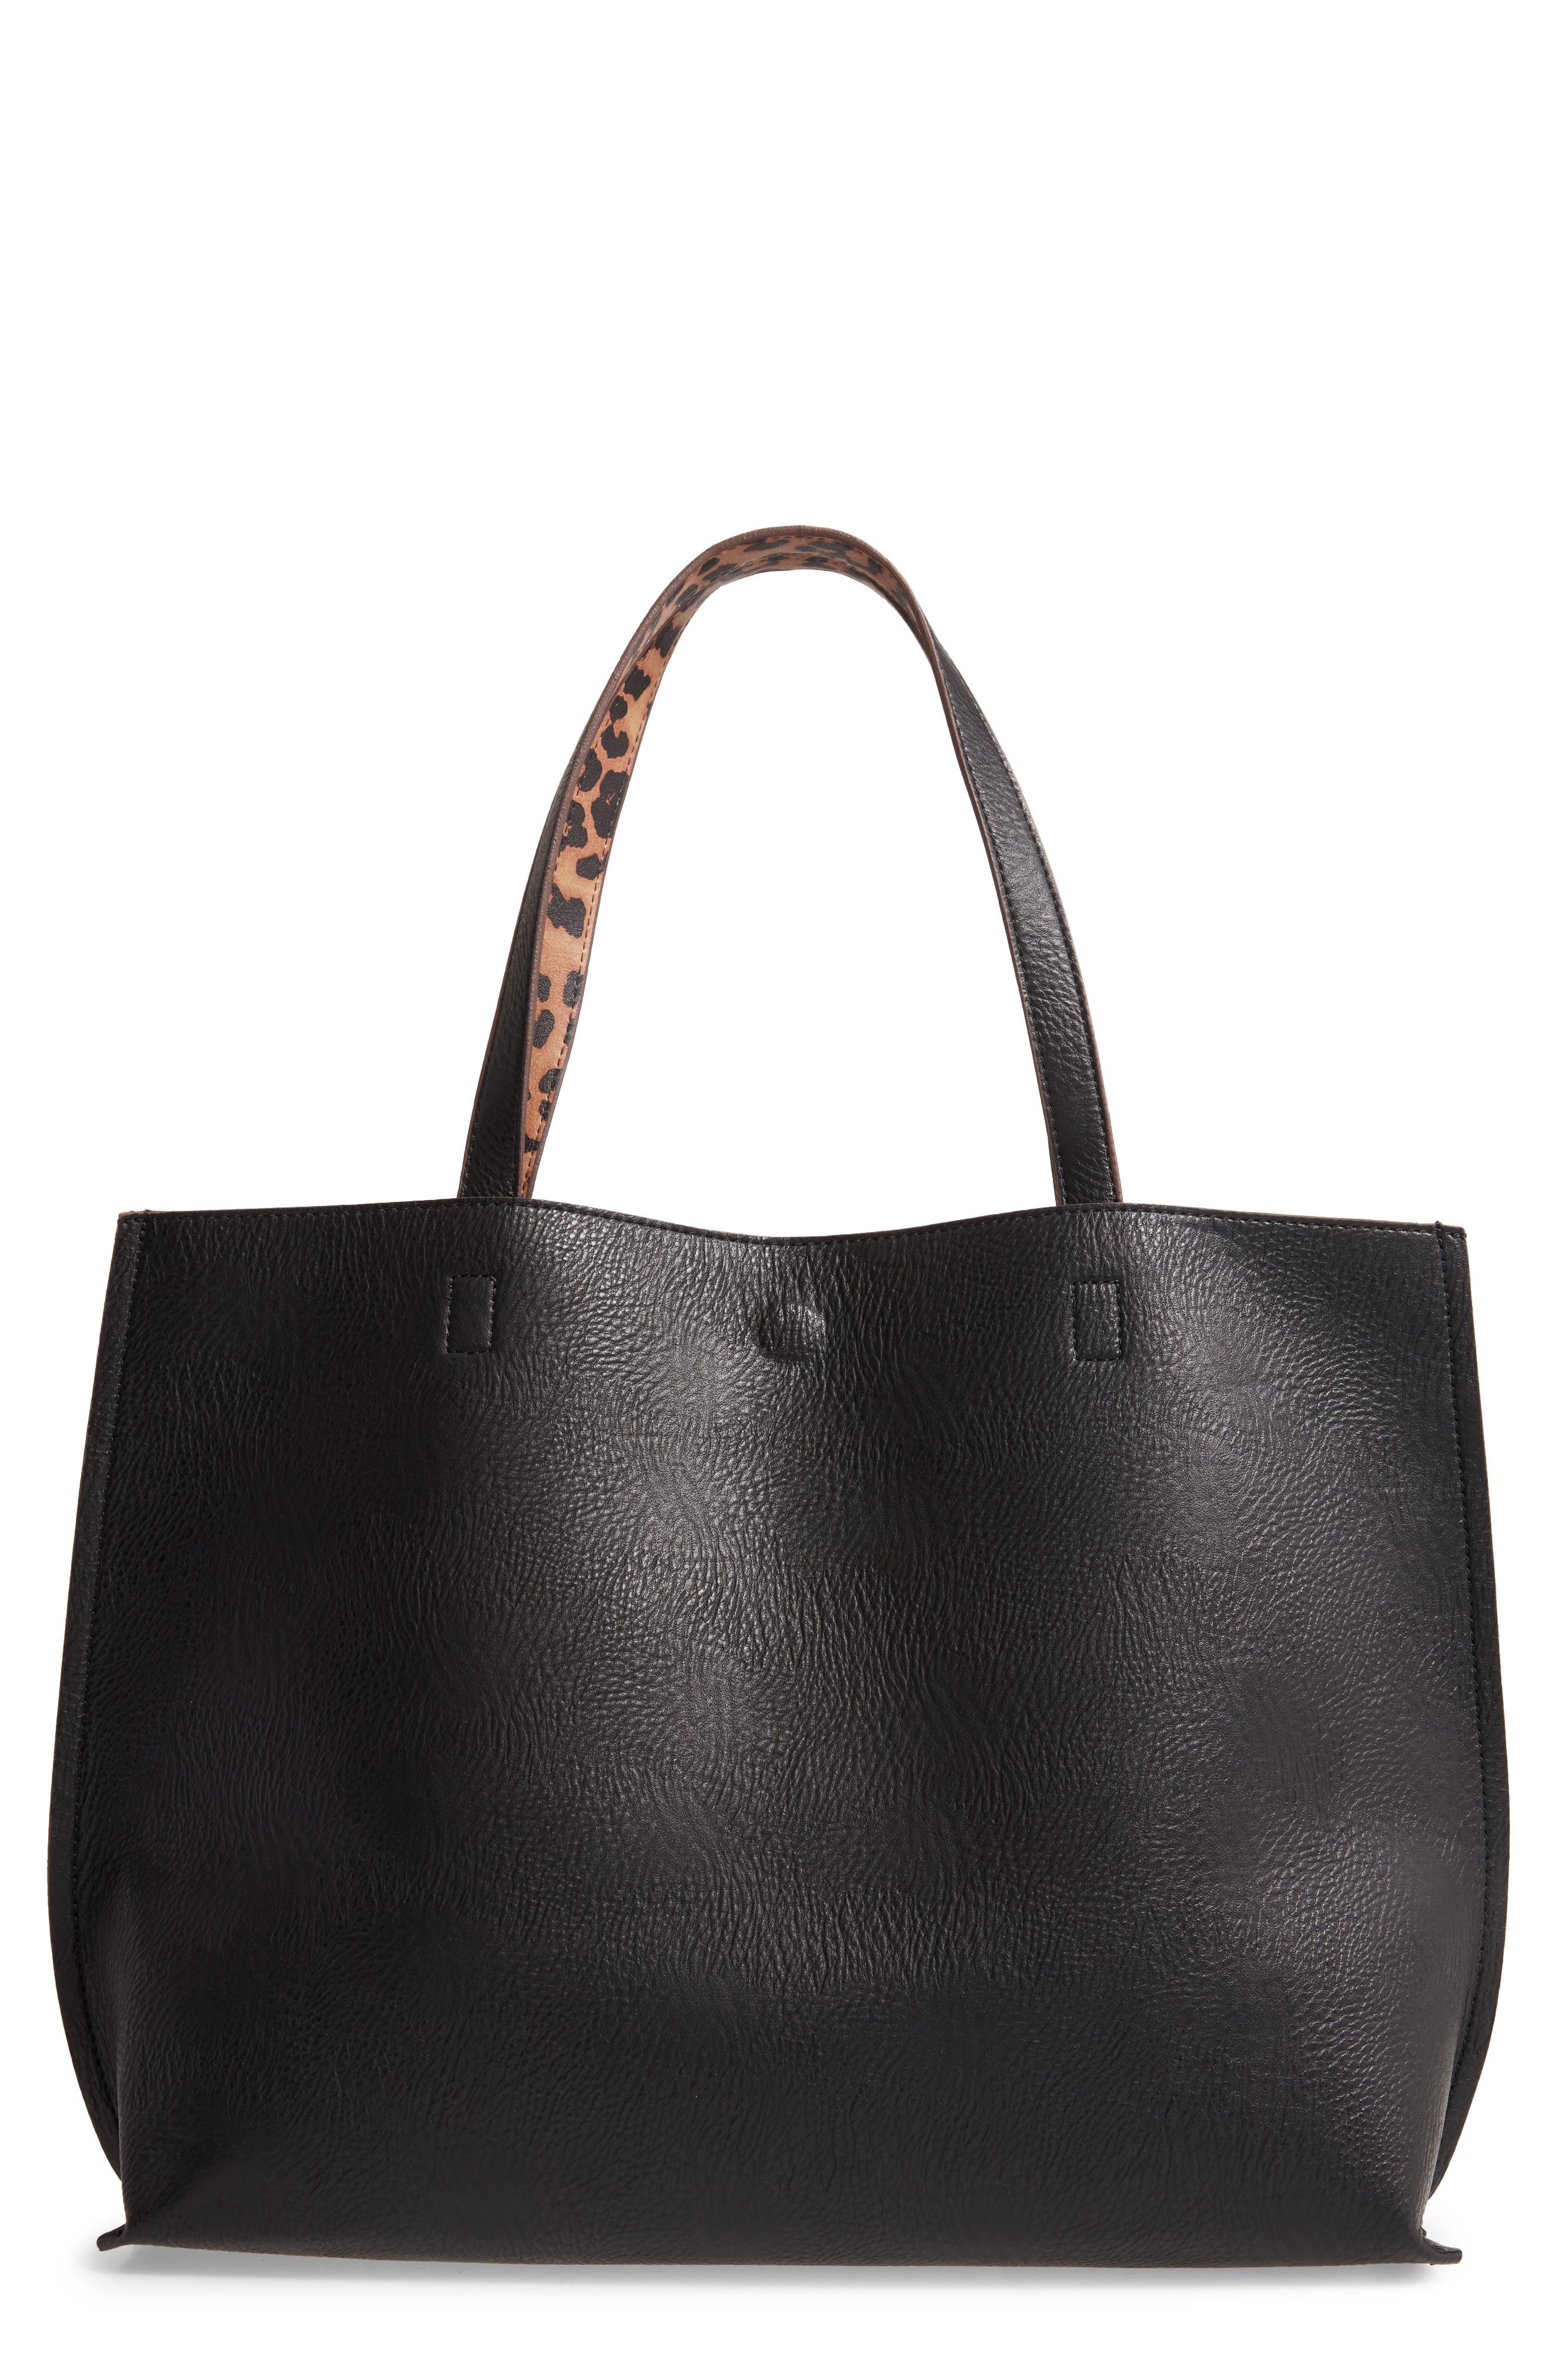 Handbag black Bags Handbags 